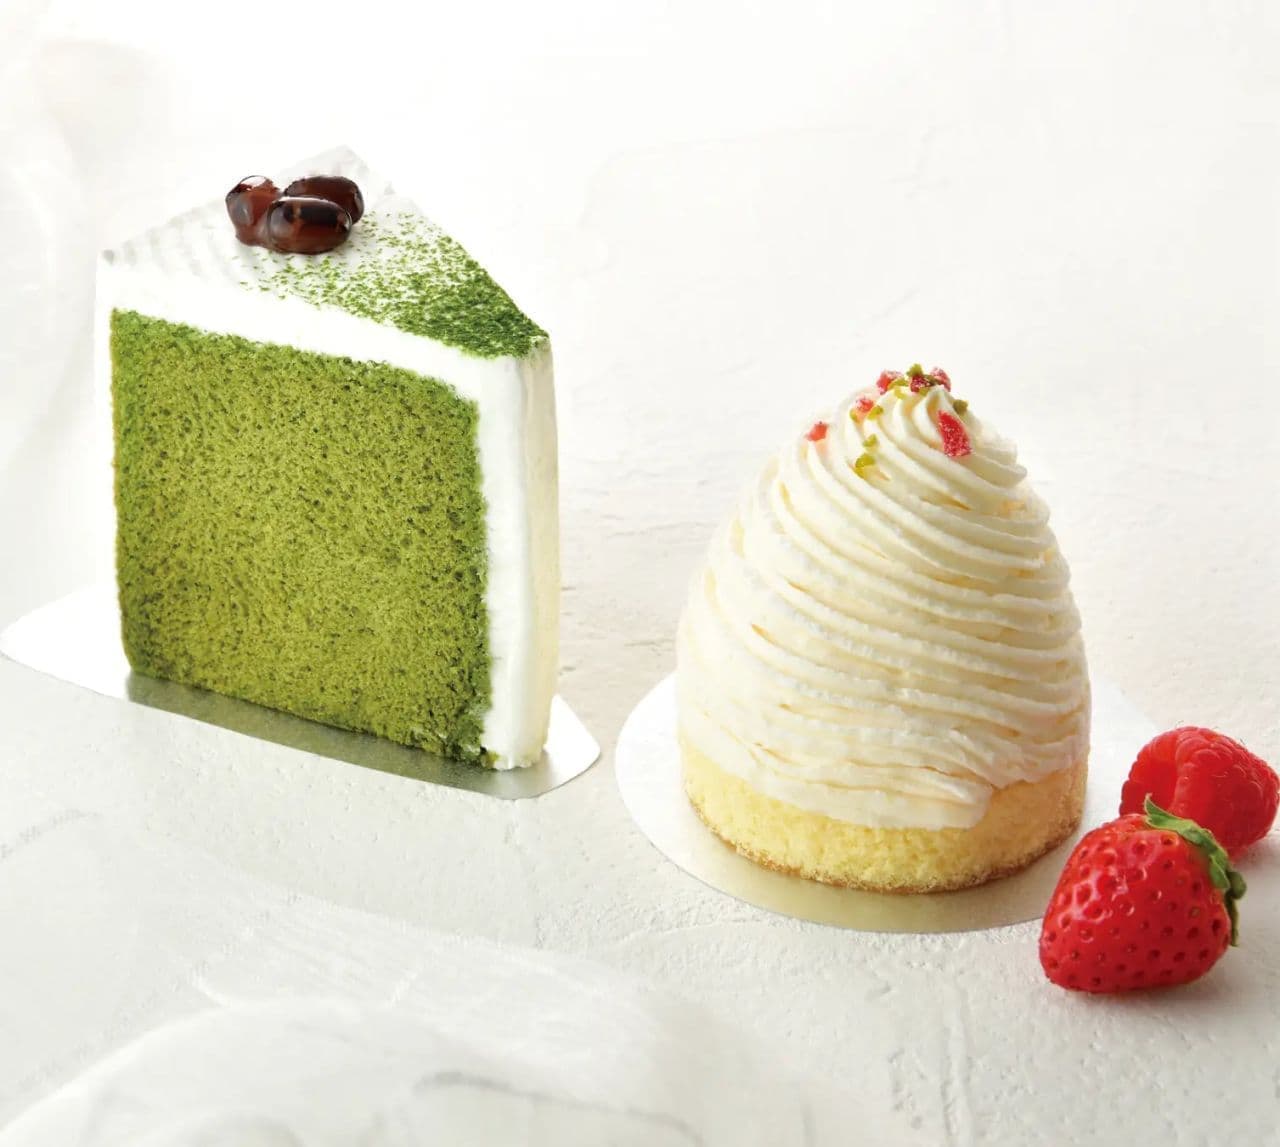 Cafe de Crié "White Chocolate & Berry Mont Blanc" and "Nishio Green Tea Chiffon Cake